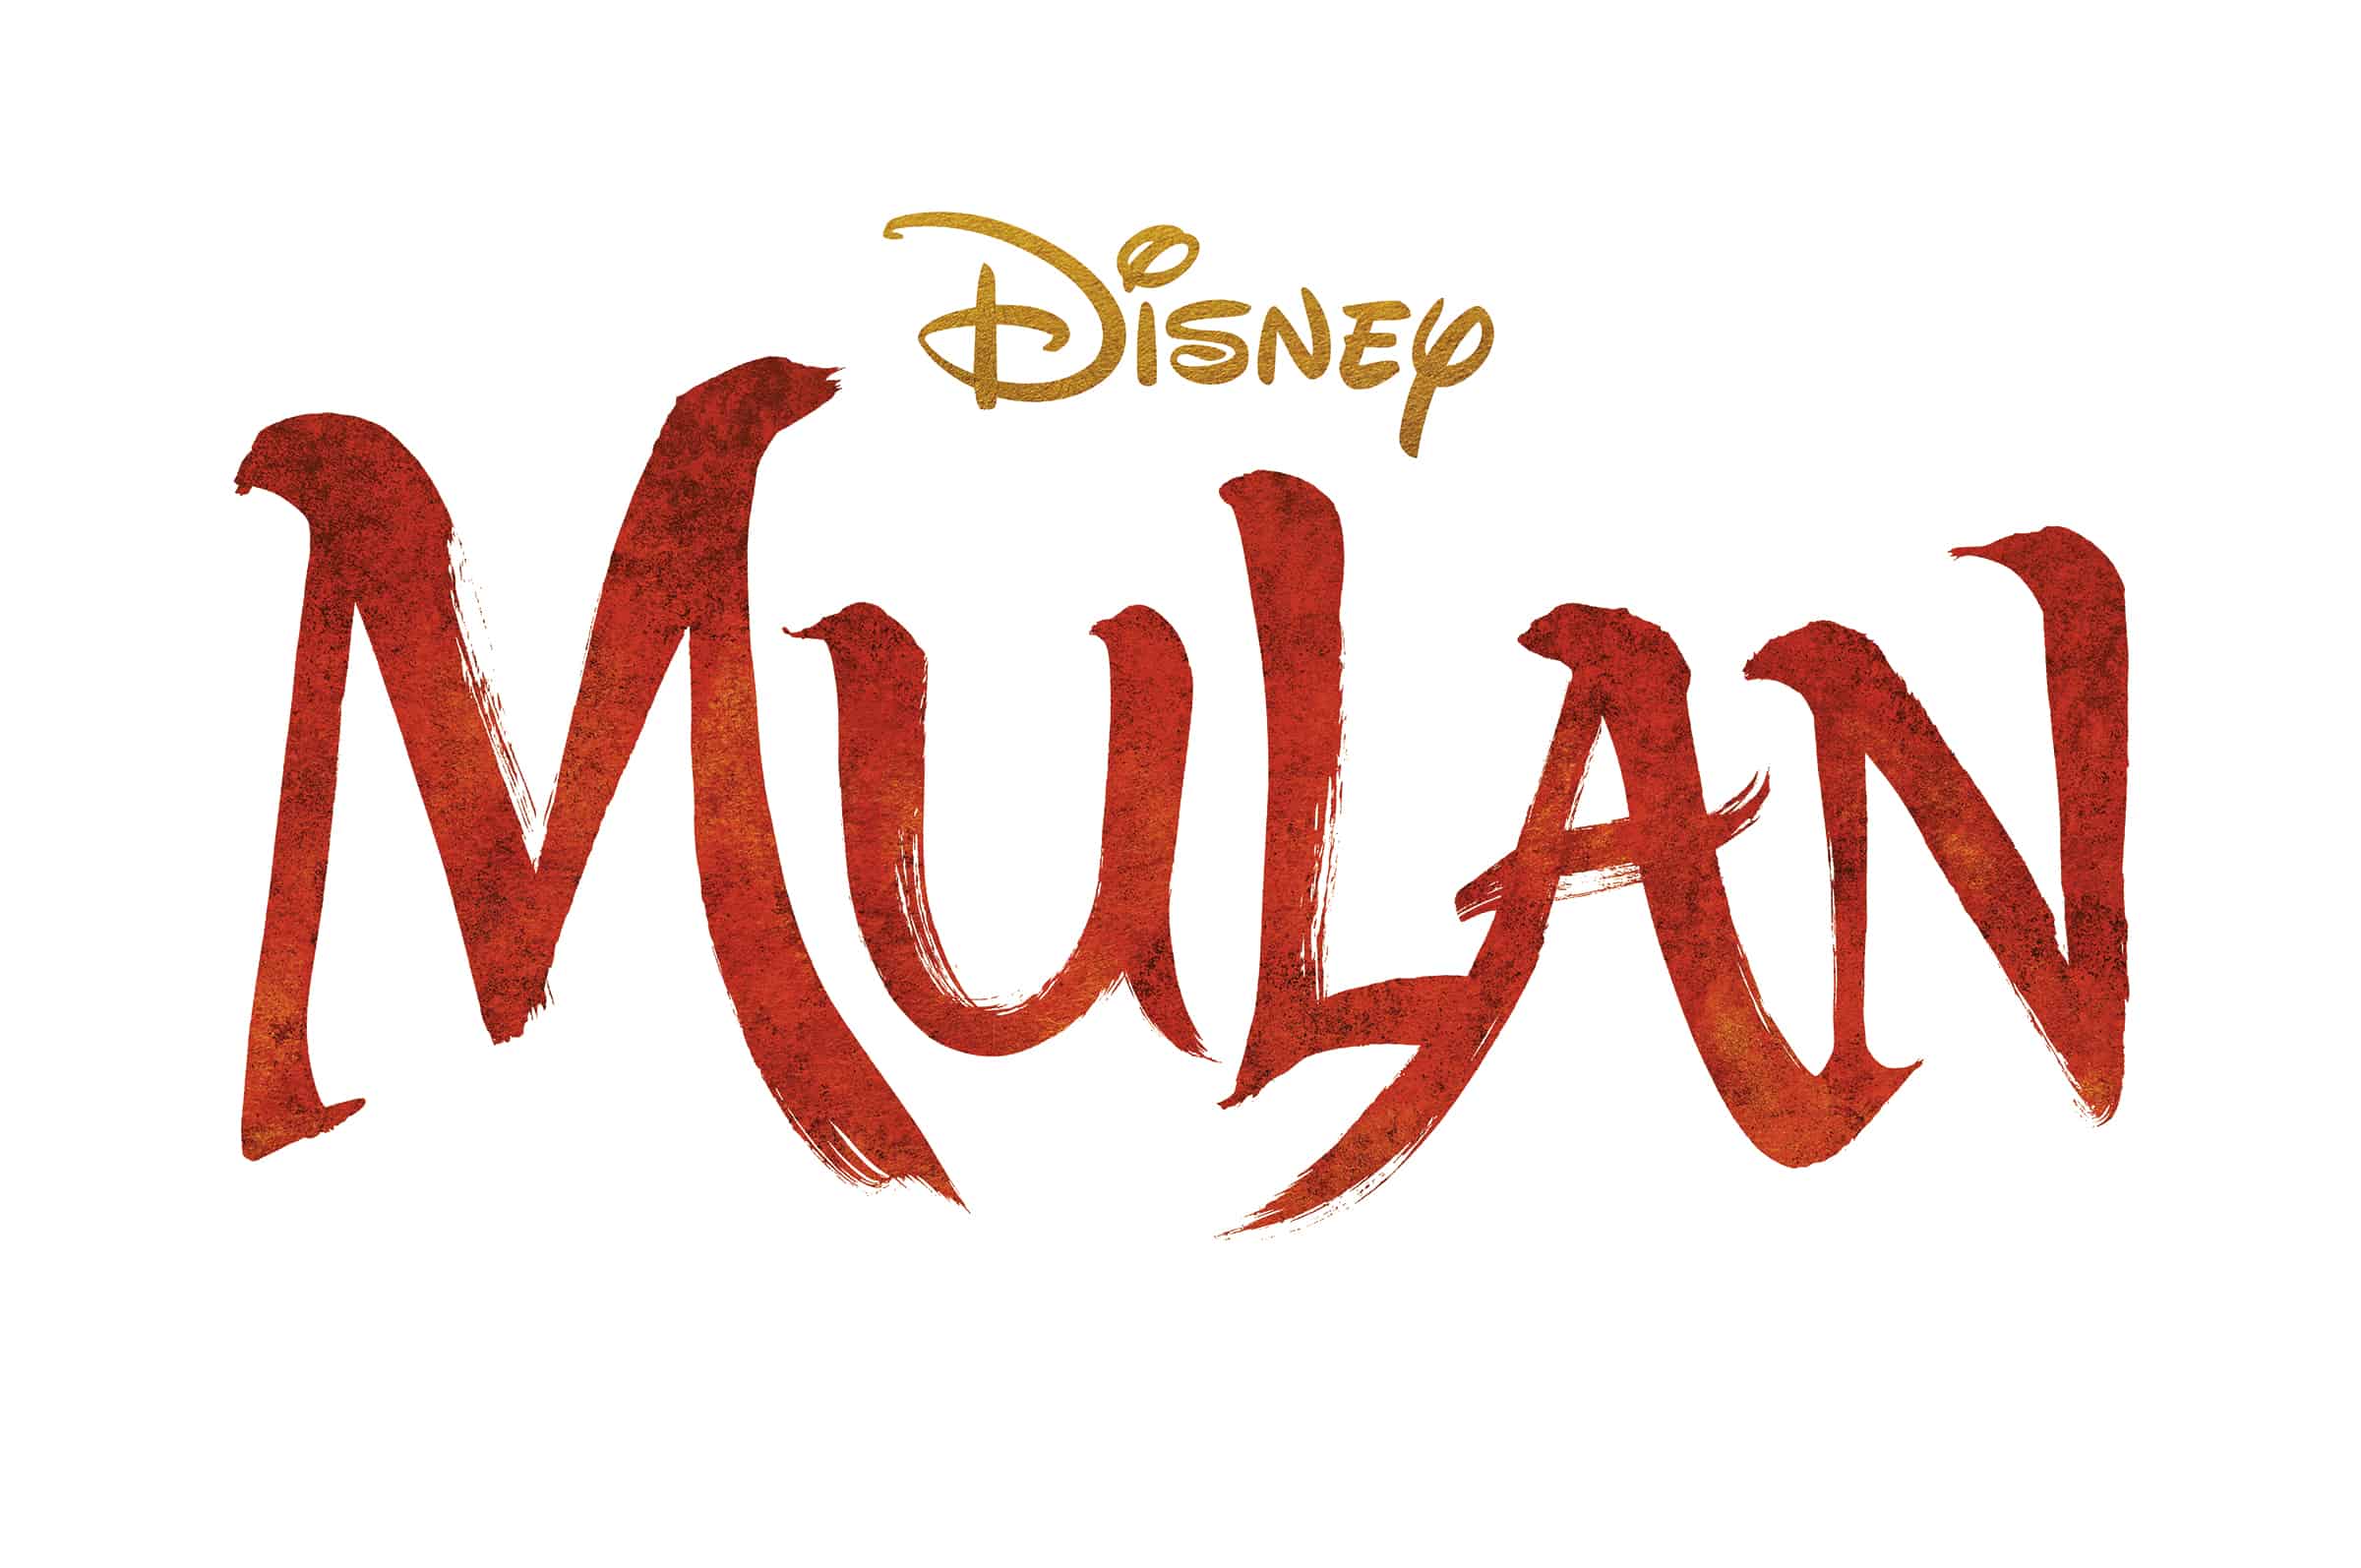 Disney’s Mulan Streams on Disney Plus on September 4